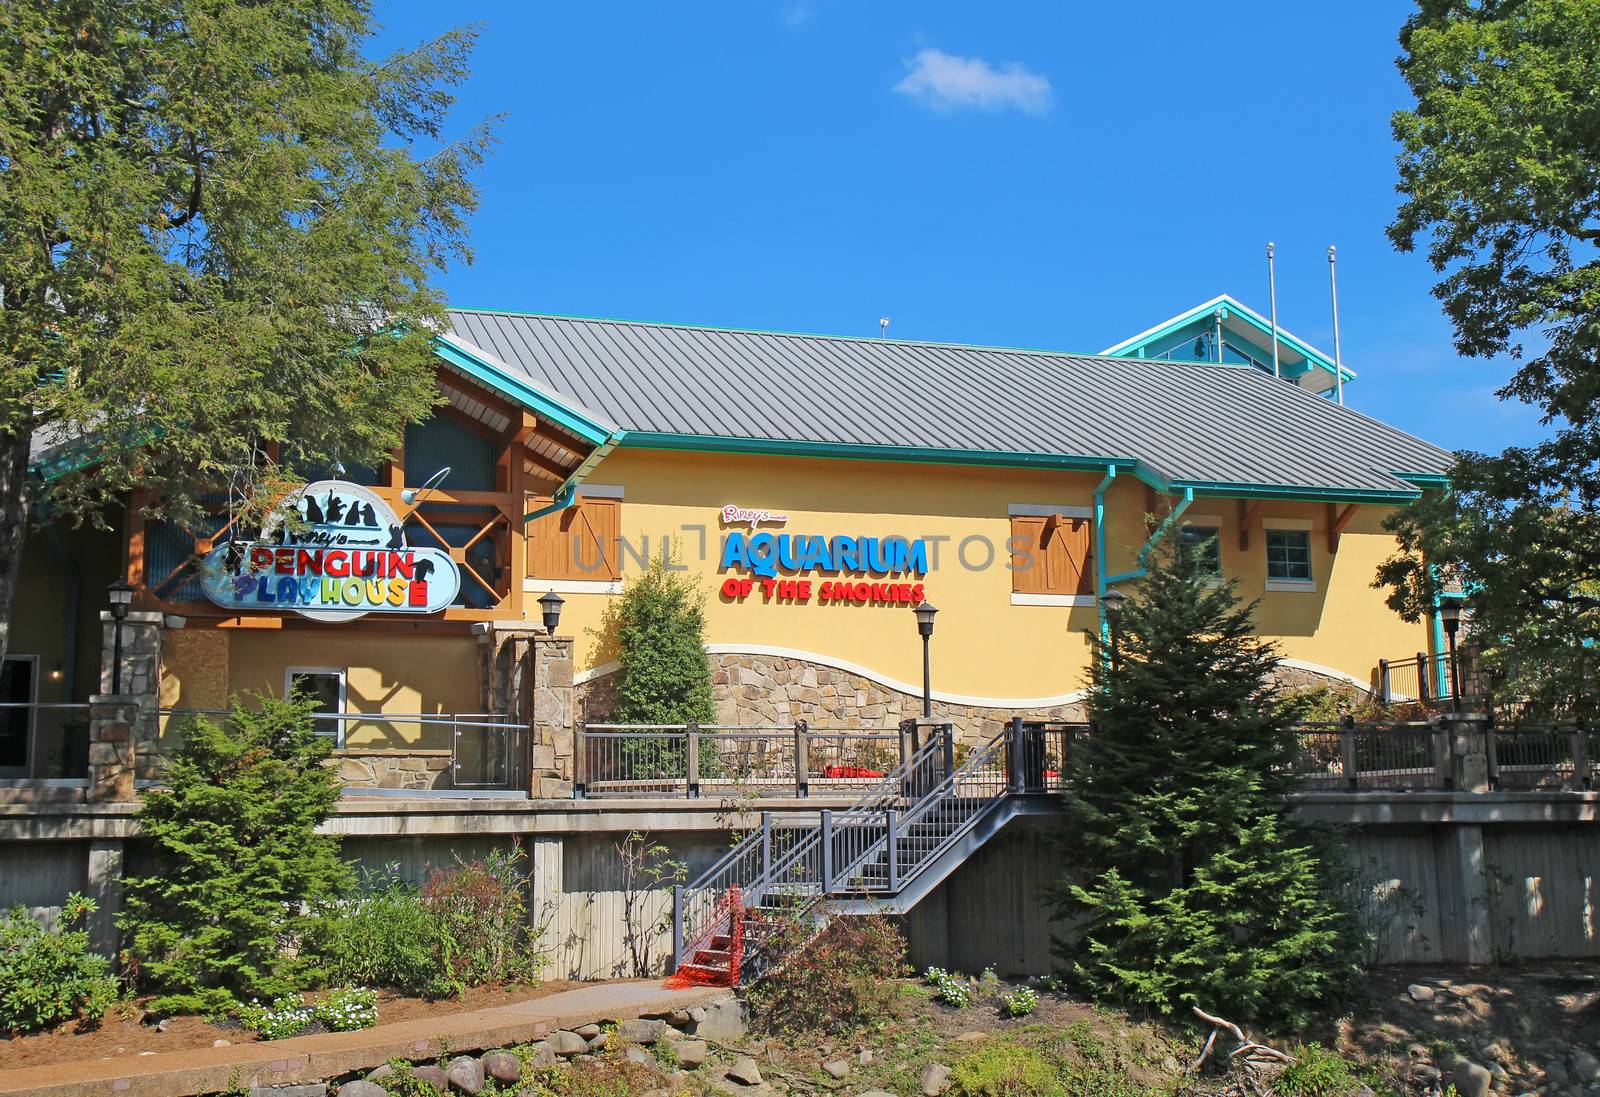 Ripleys Aquarium of the Smokies in Gatlinburg, Tennessee by sgoodwin4813